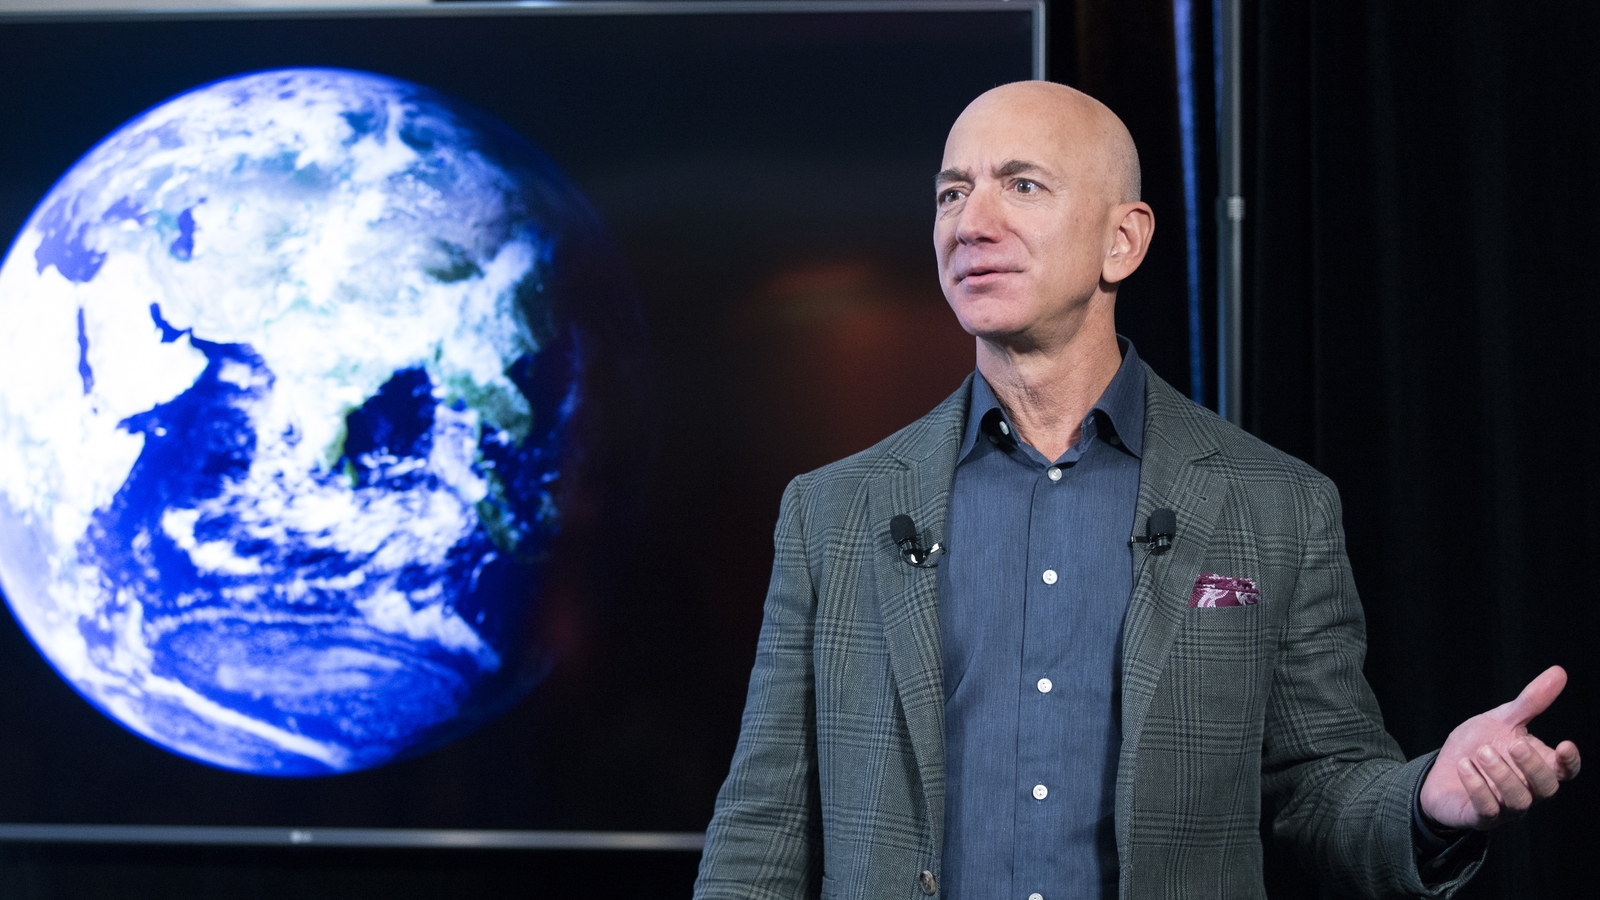 Amazon S Bezos To Fly To Space On Blue Origin Rocket